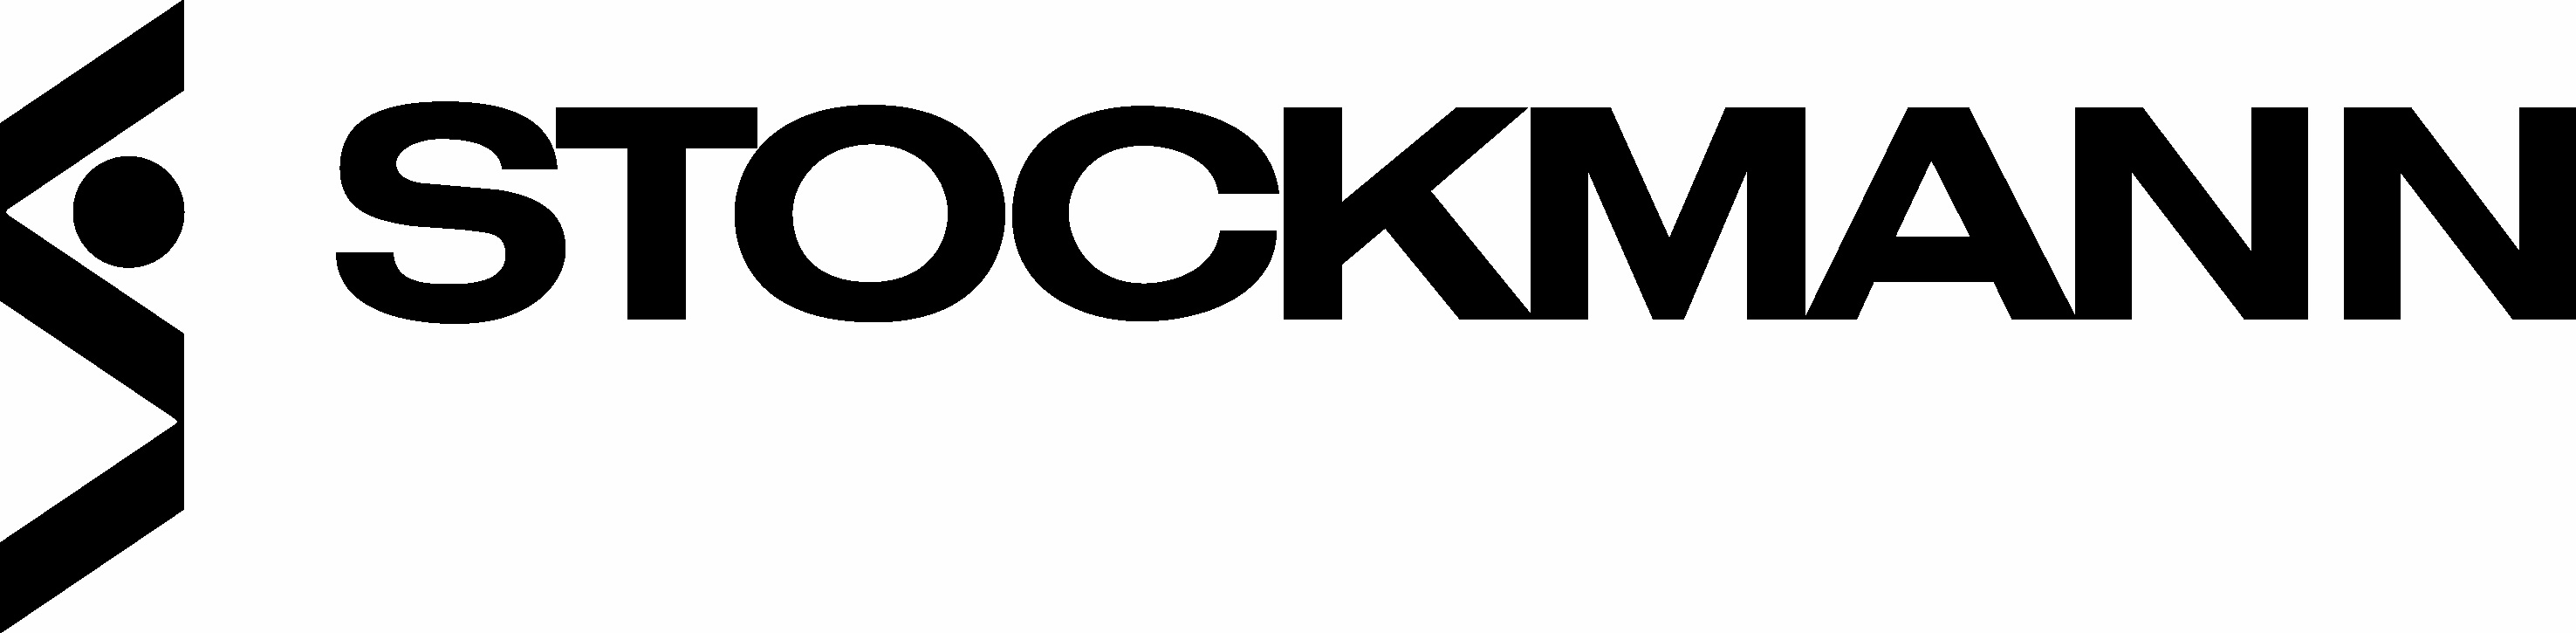 Stockmann logo bw